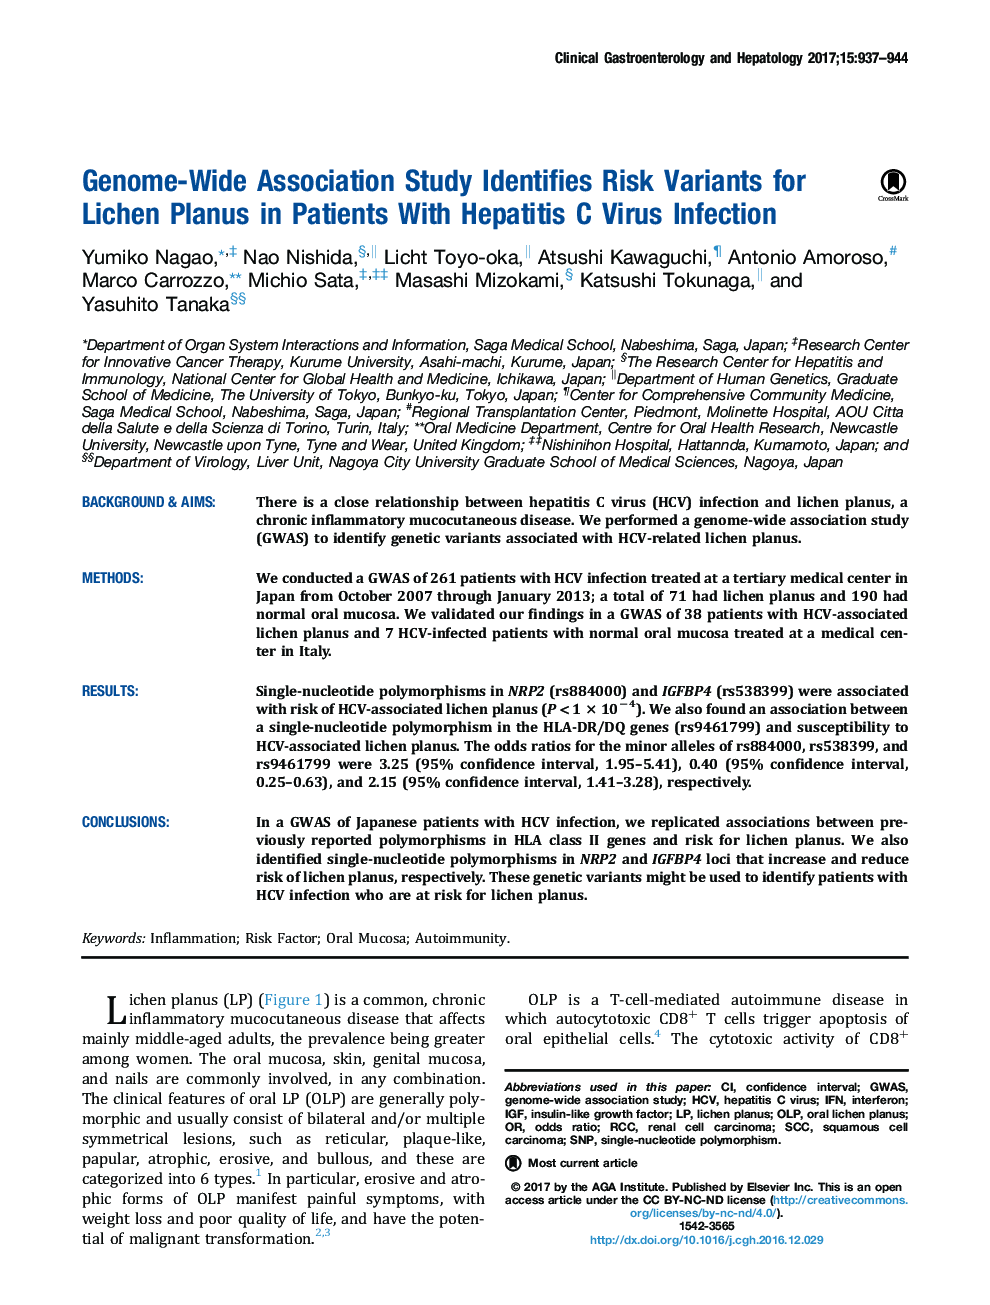 Genome-Wide Association Study Identifies Risk Variants for Lichen Planus in Patients With Hepatitis C Virus Infection